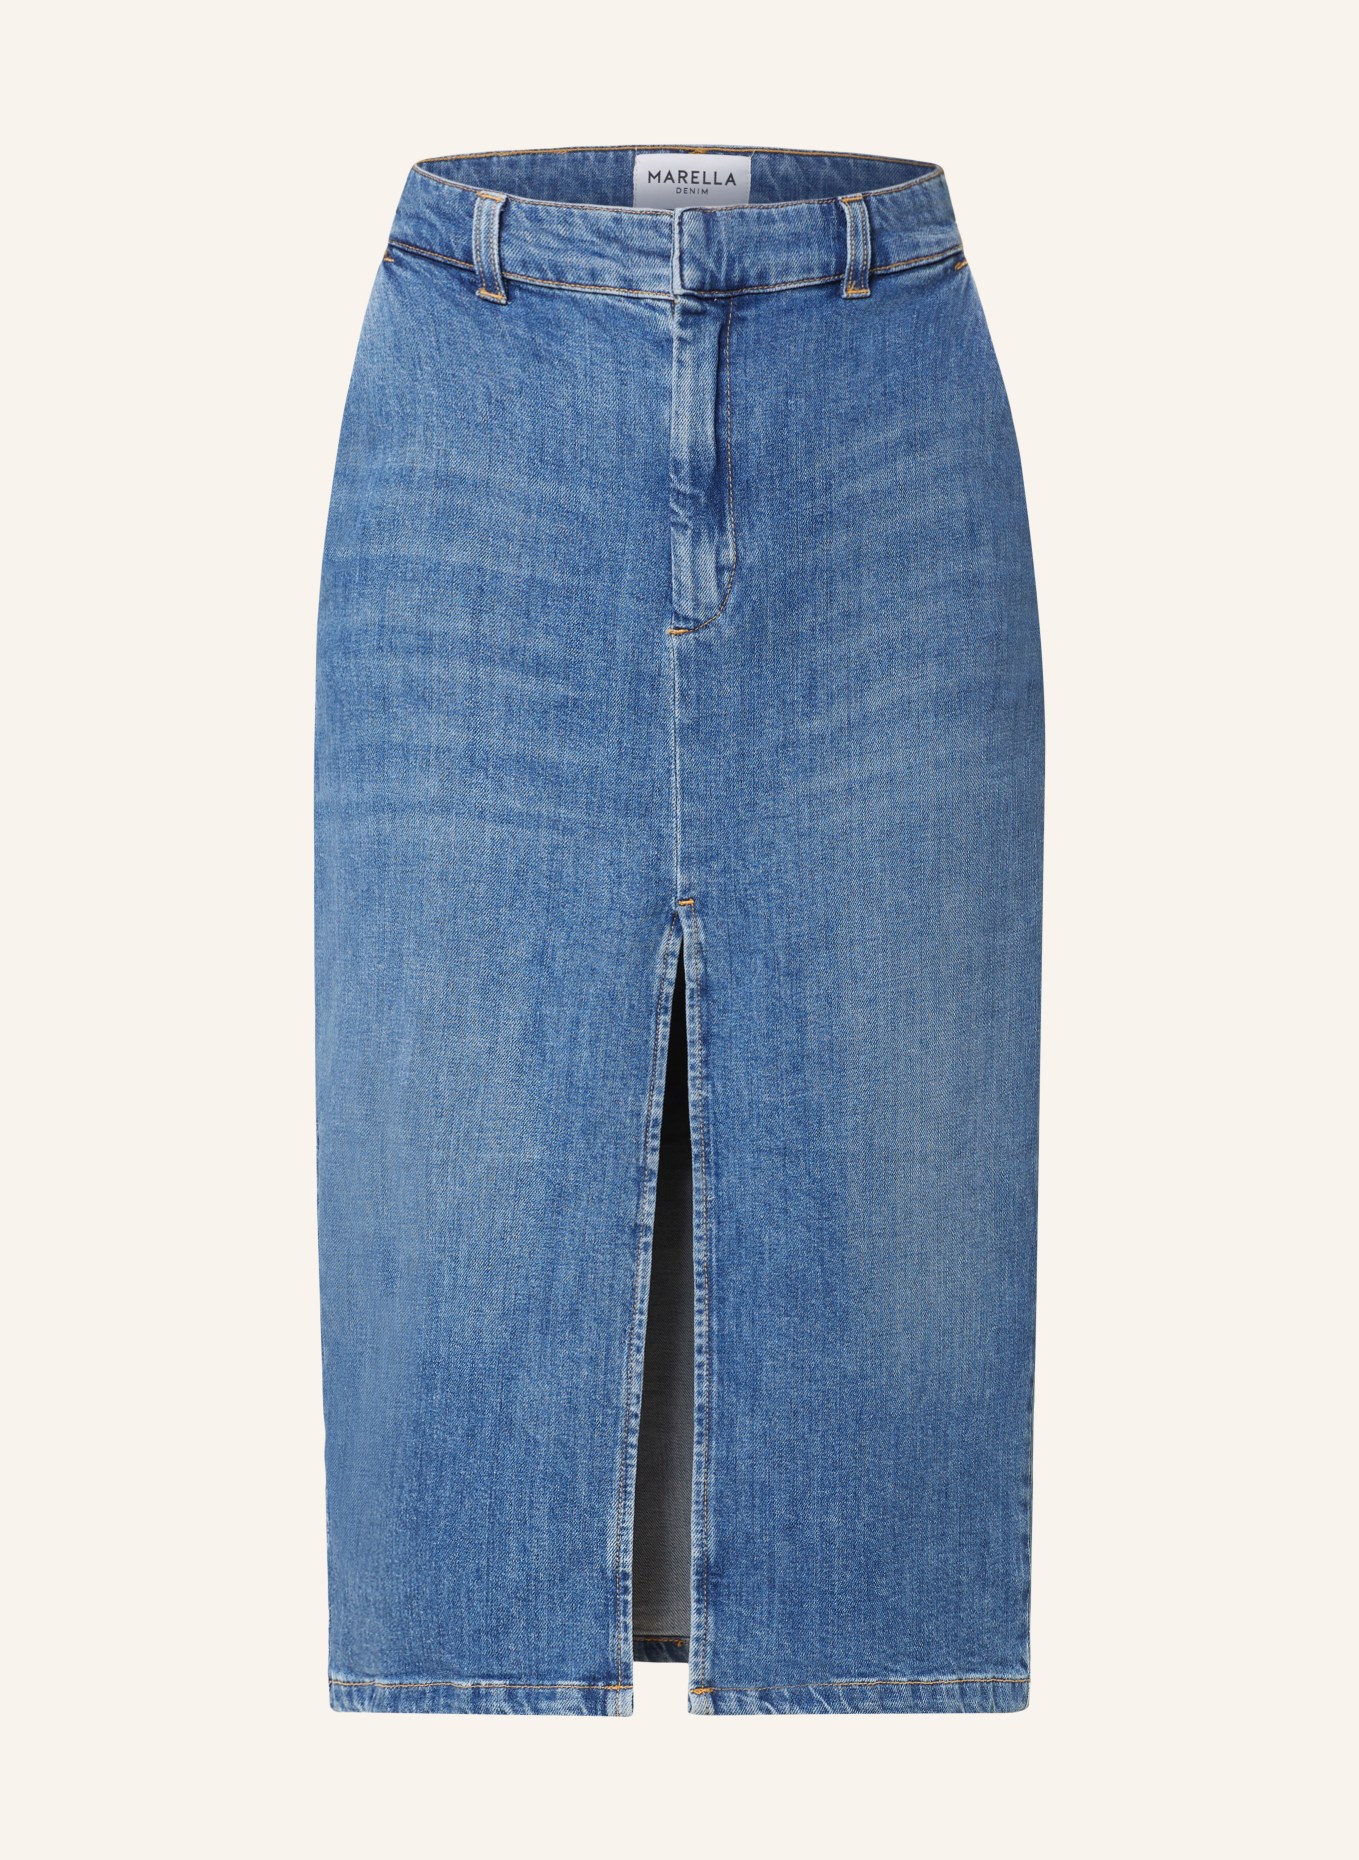 MARELLA Jeansrock, Farbe: 001 Blue Jeans Dark (Bild 1)